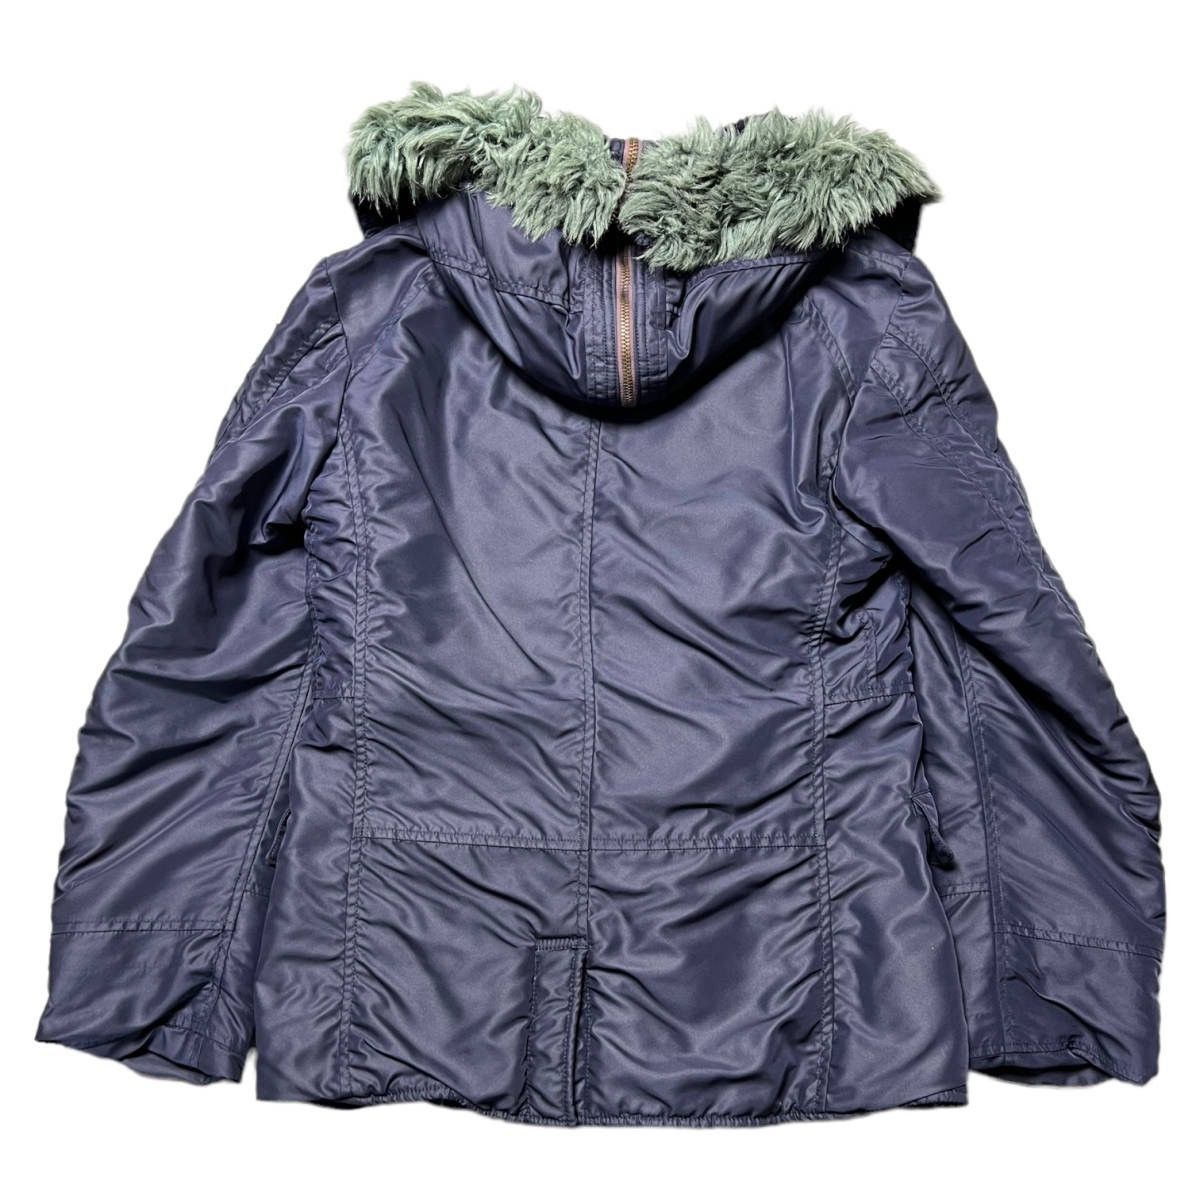 Junya Watanabe AW2006 N-3B Winter Jacket Size US M / EU 48-50 / 2 - 3 Thumbnail